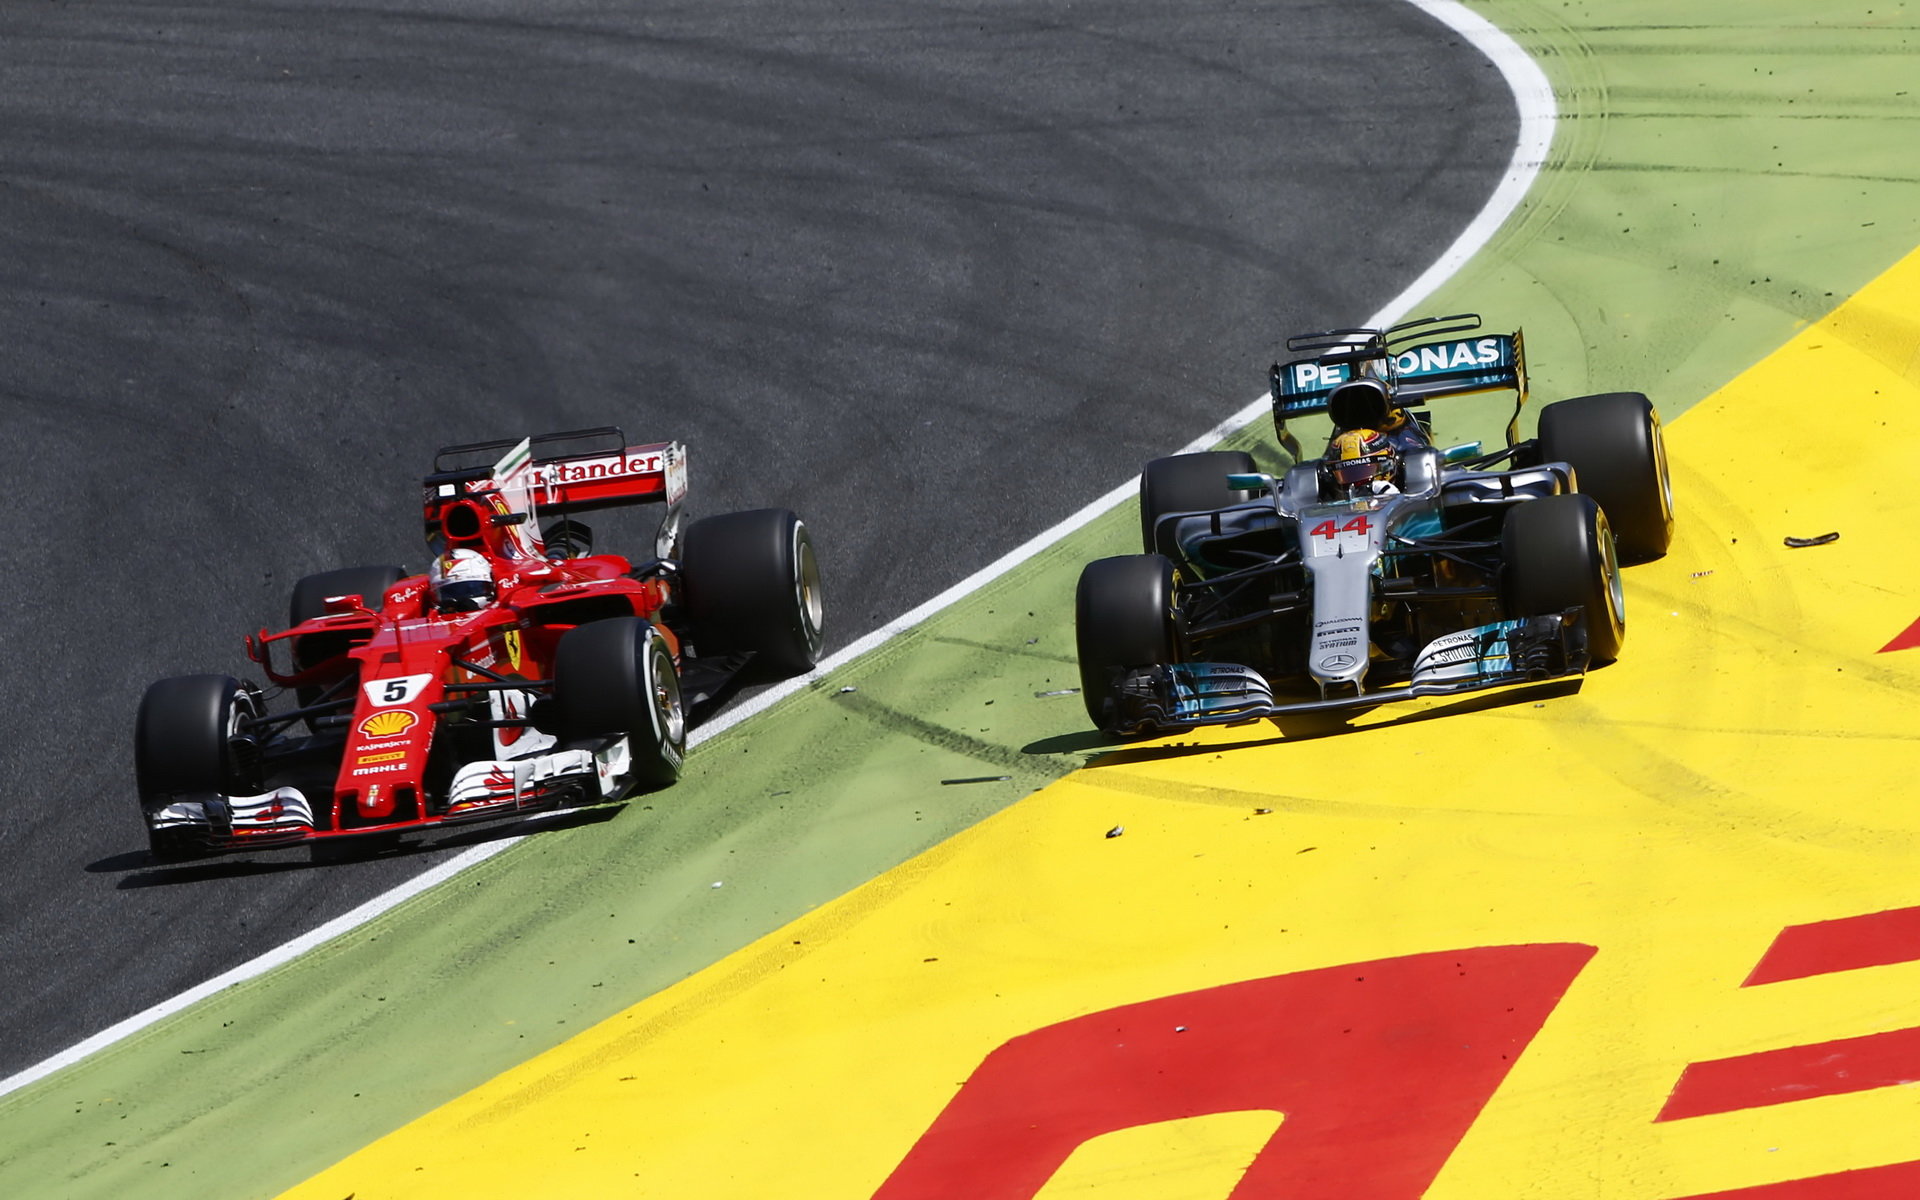 Sebastian Vettel letos na dráze na Lewise Hamiltona nestačil